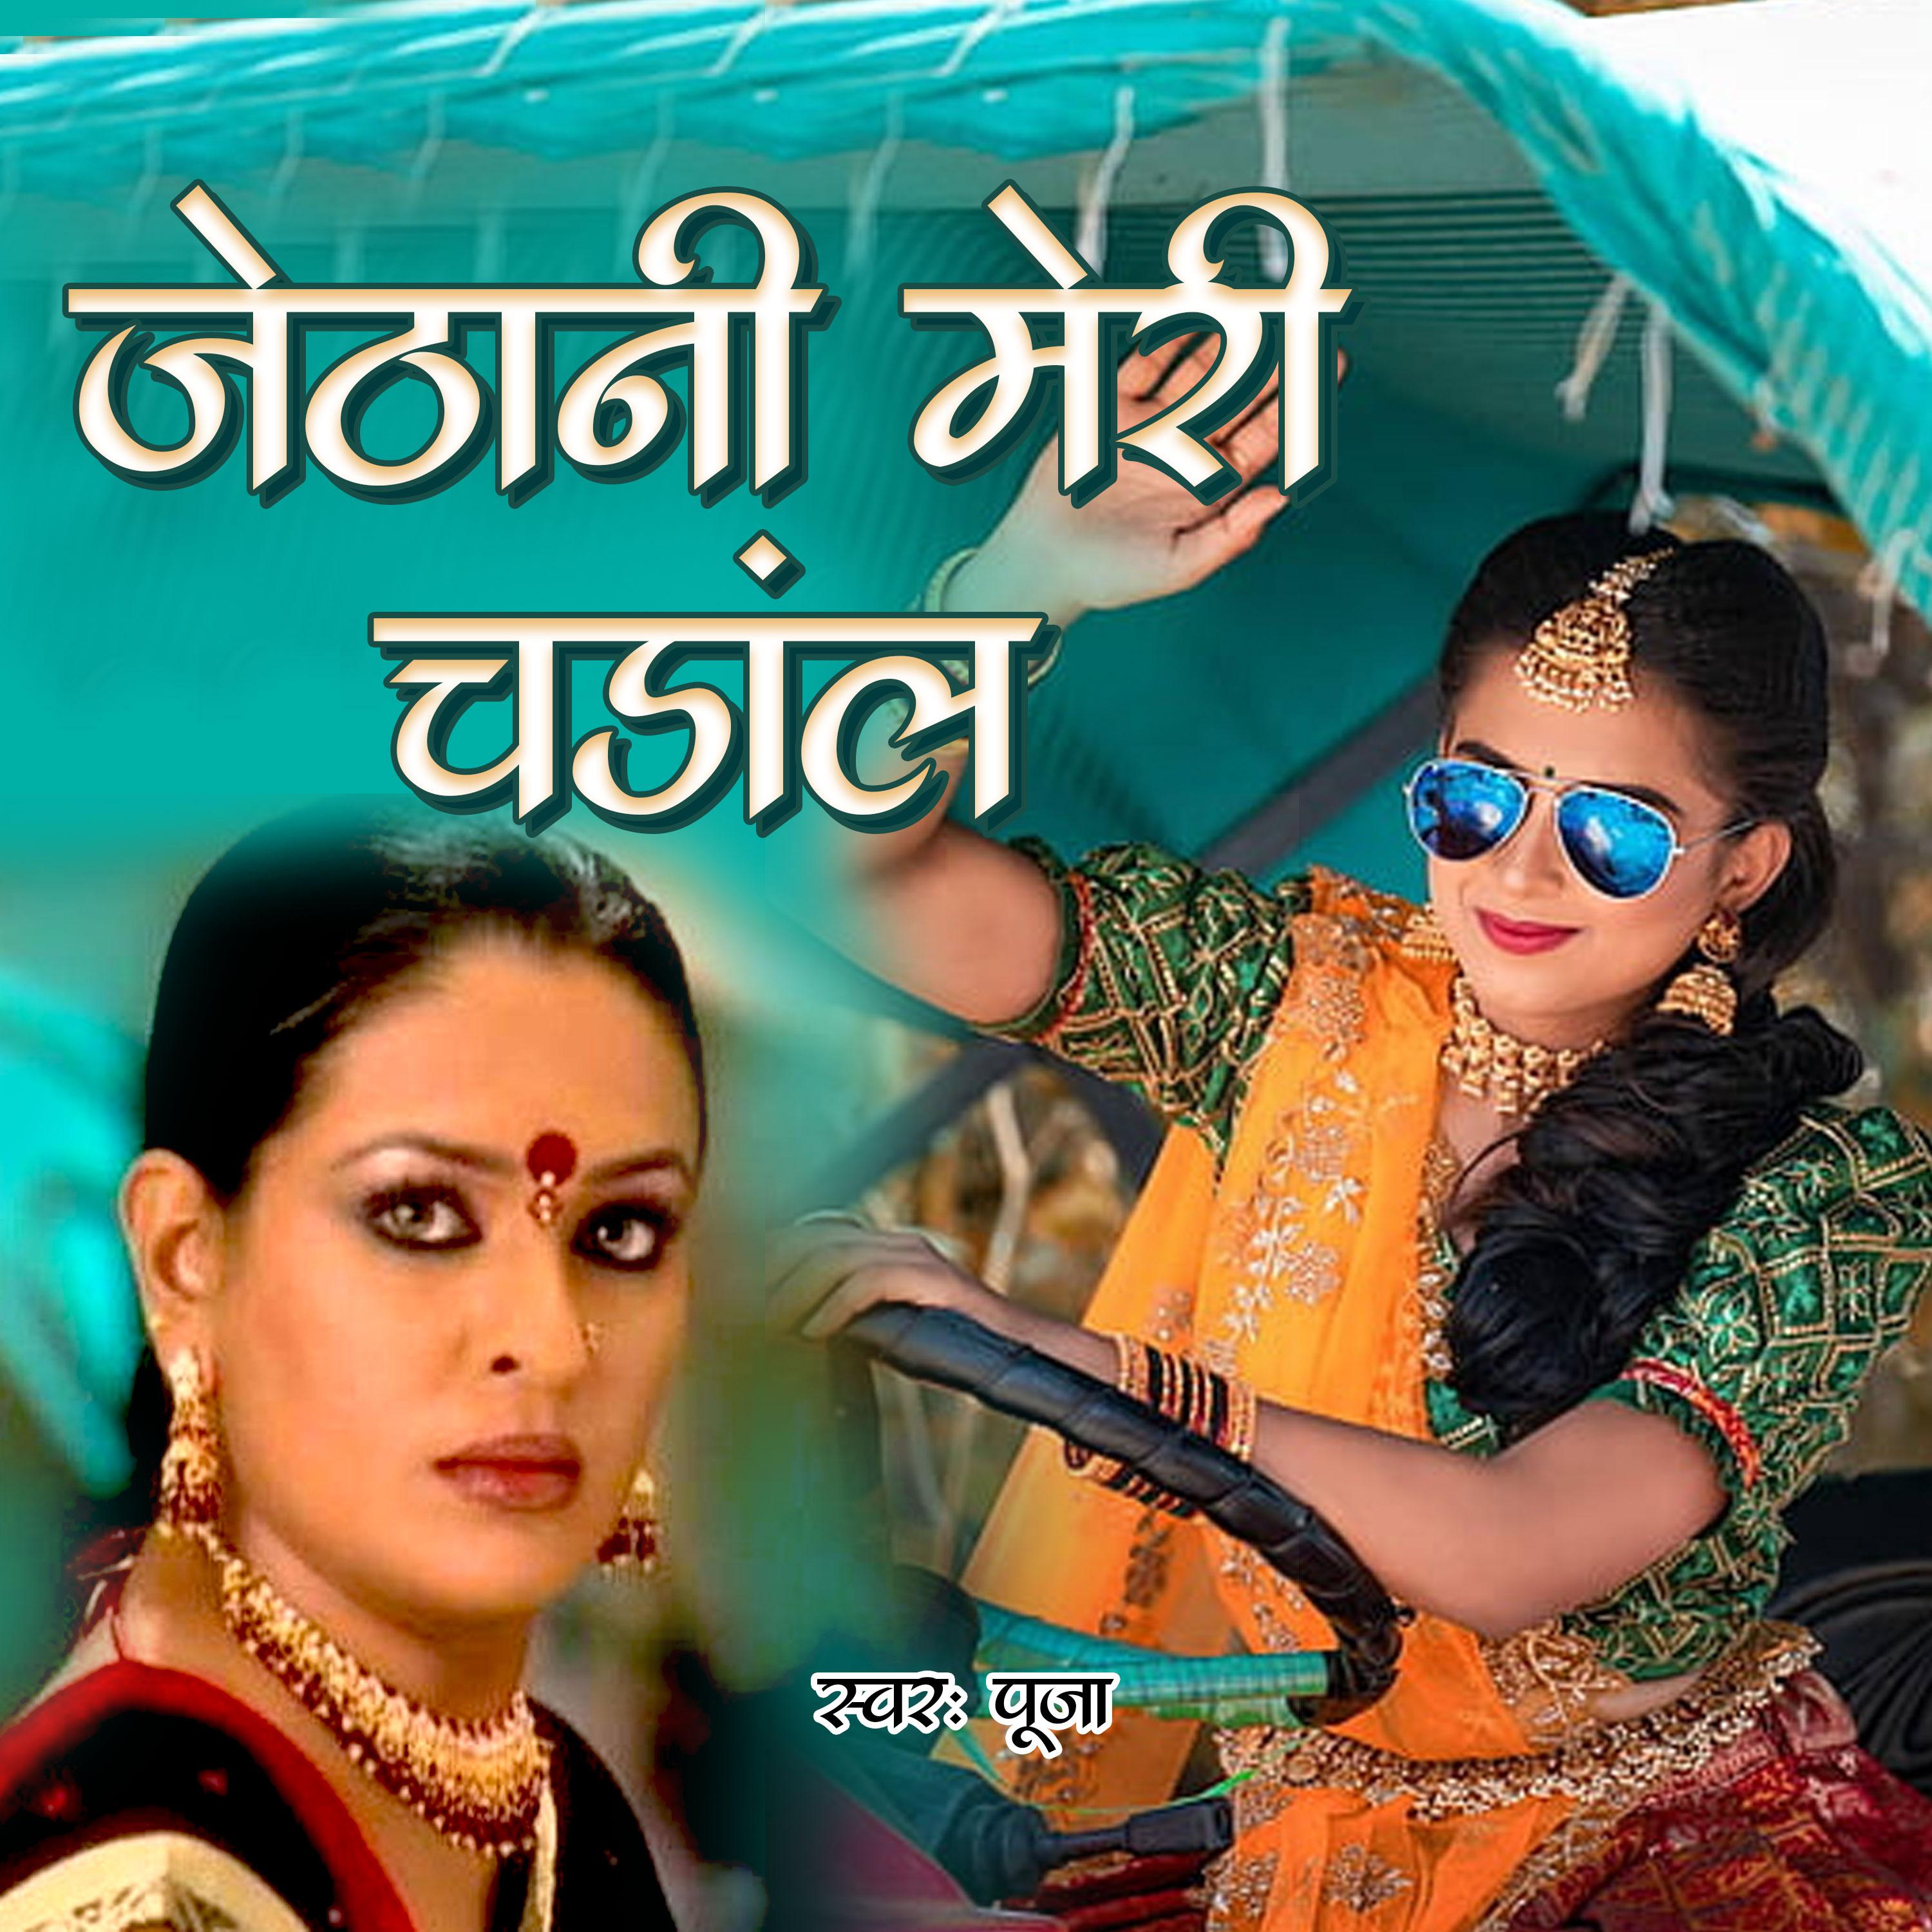 Pooja - Jethani Meri Chandal